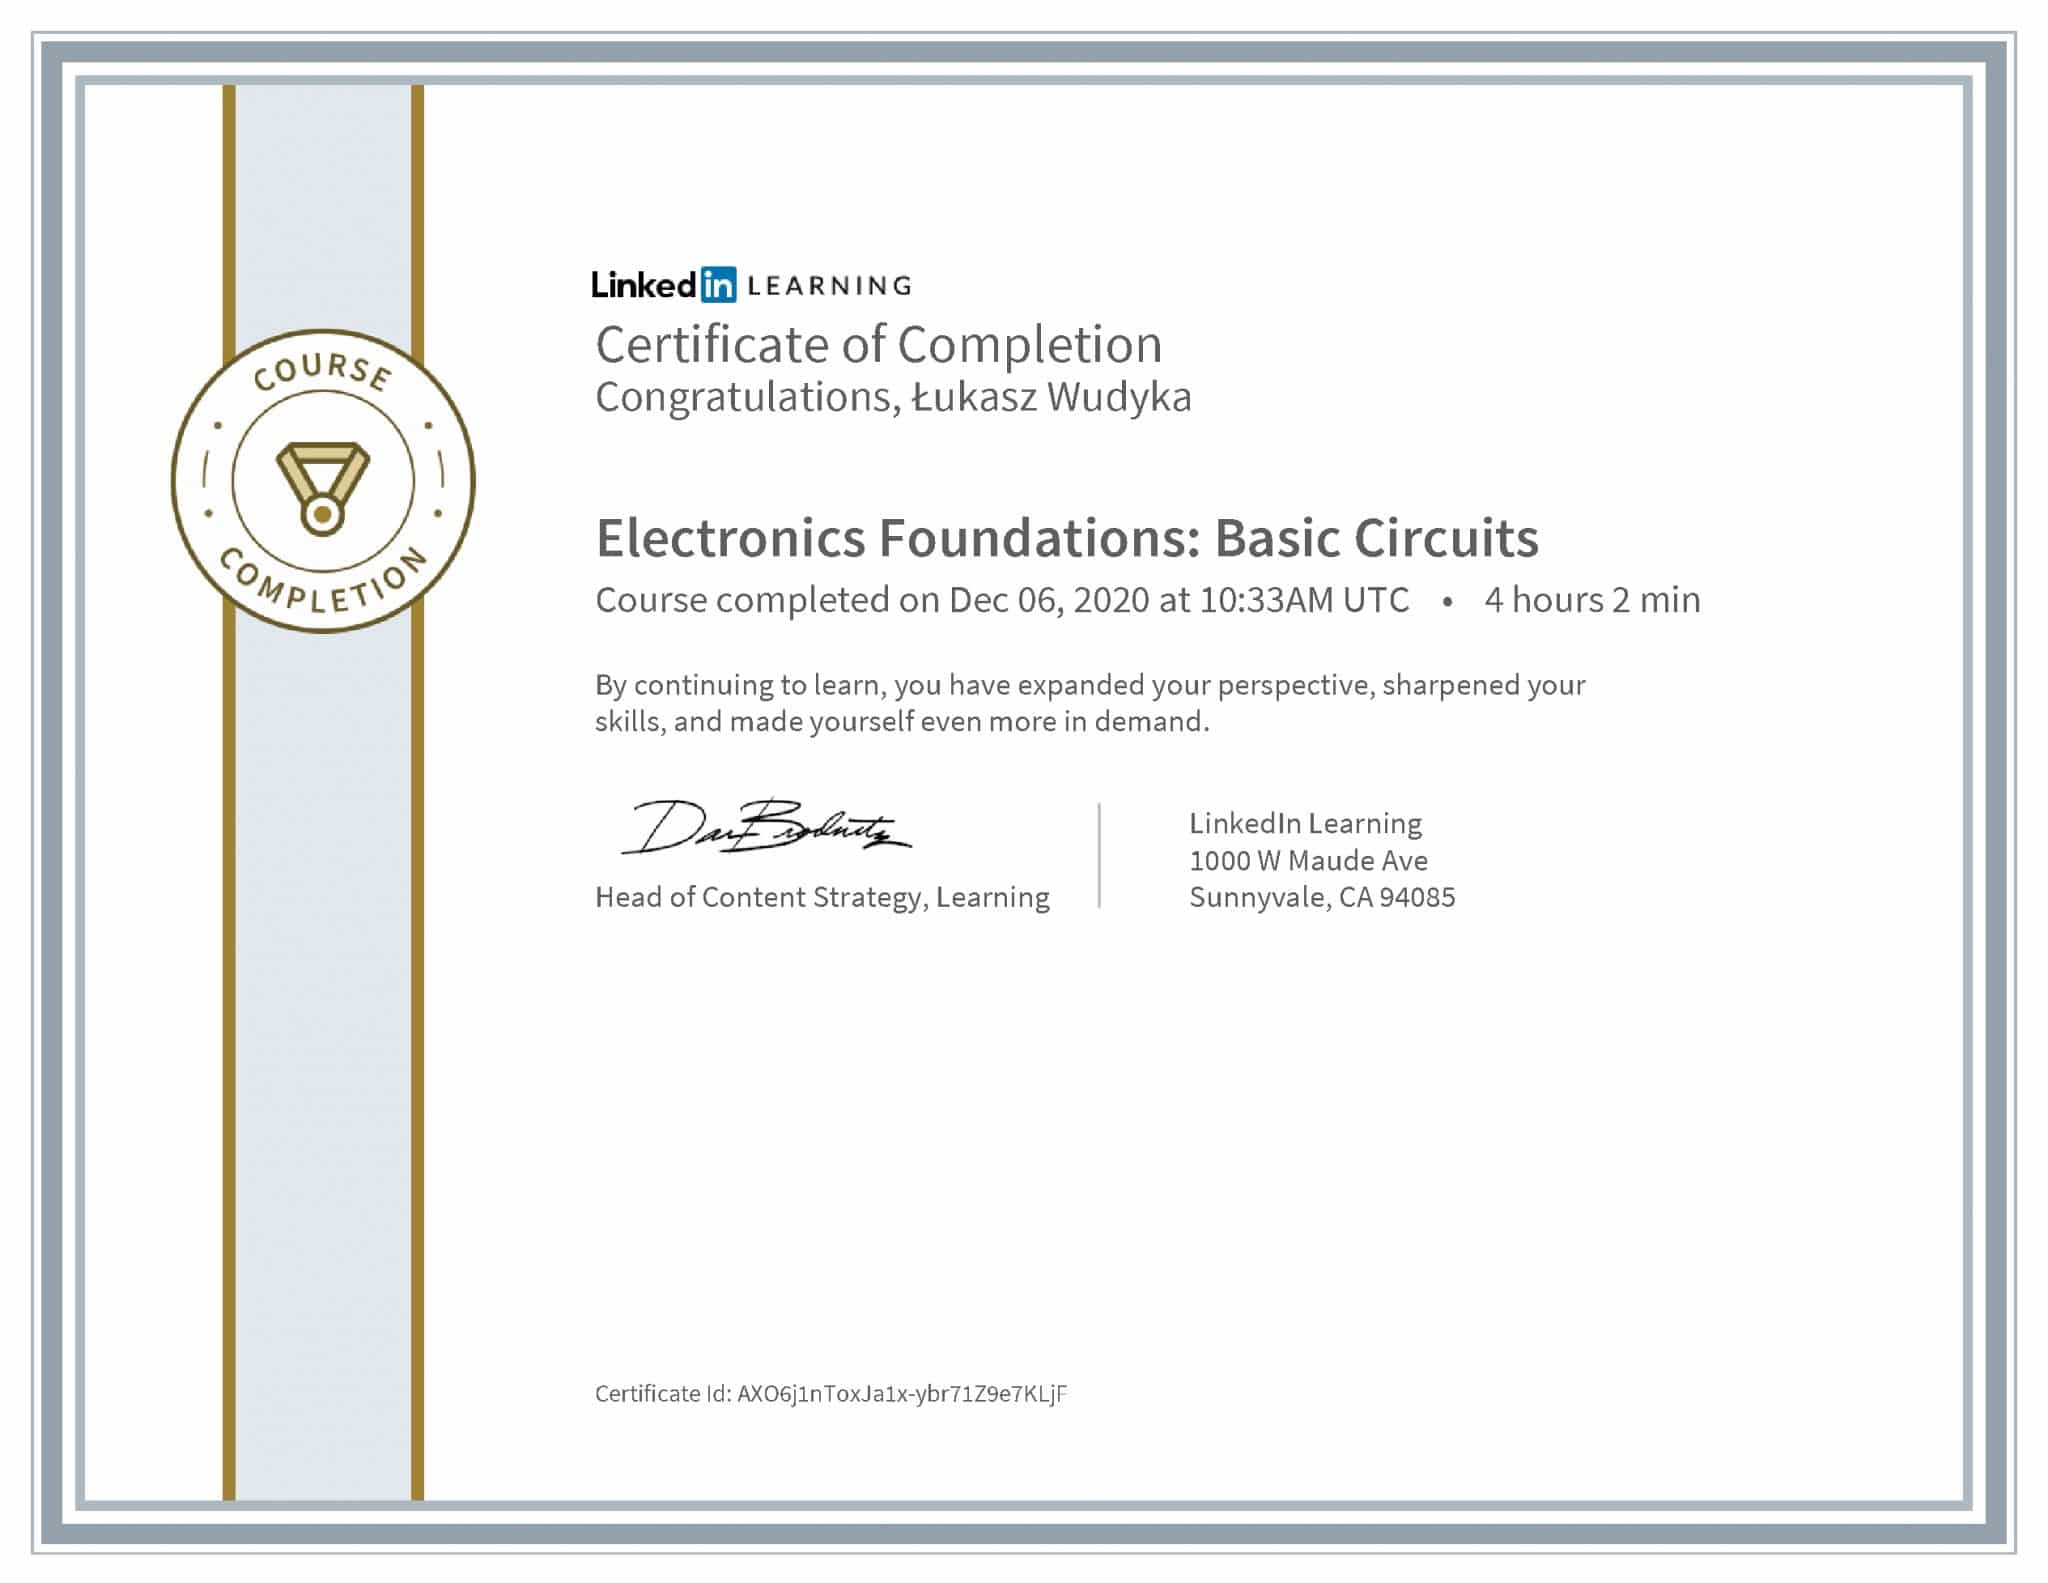 Łukasz Wudyka certyfikat LinkedIn Electronics Foundations: Basic Circuits